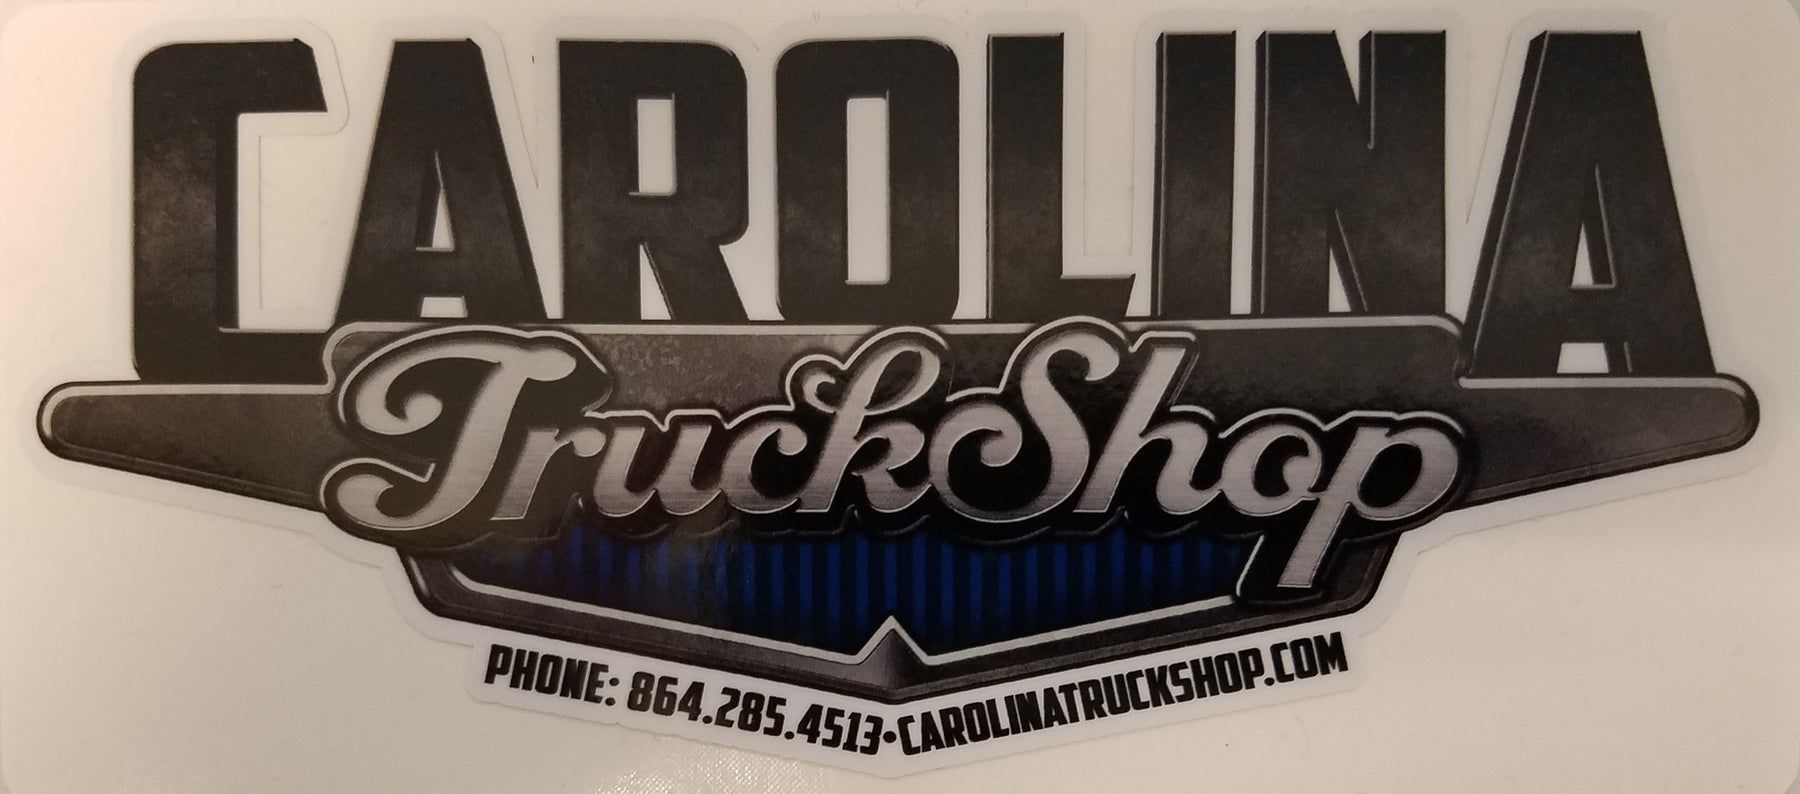 Carolina Truck Shop Decal - Small